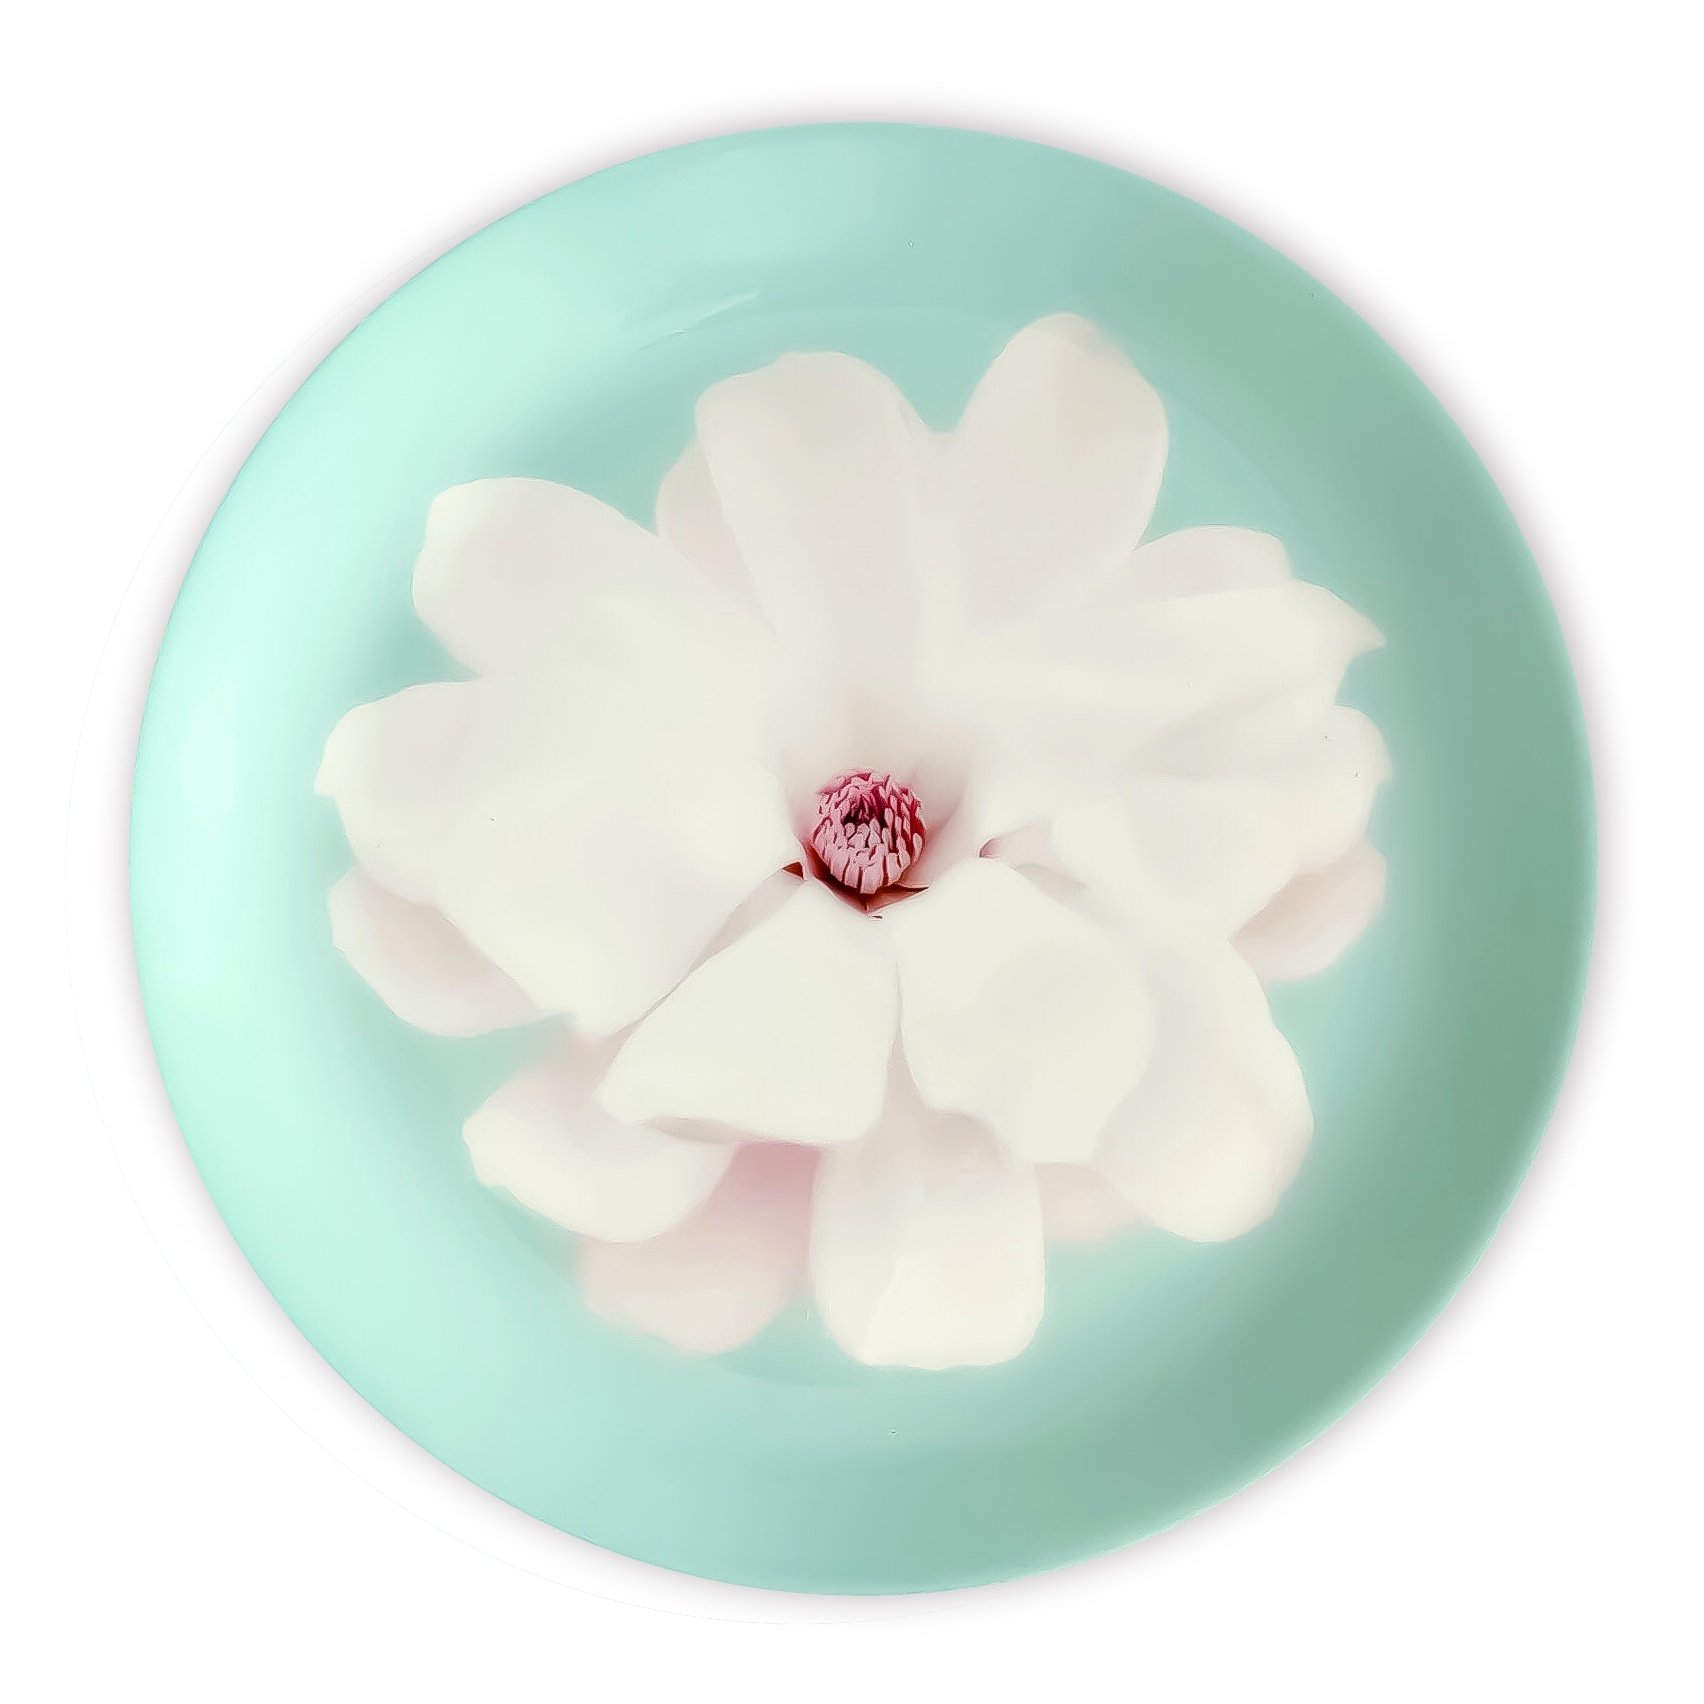 Star Magnolia porcelain